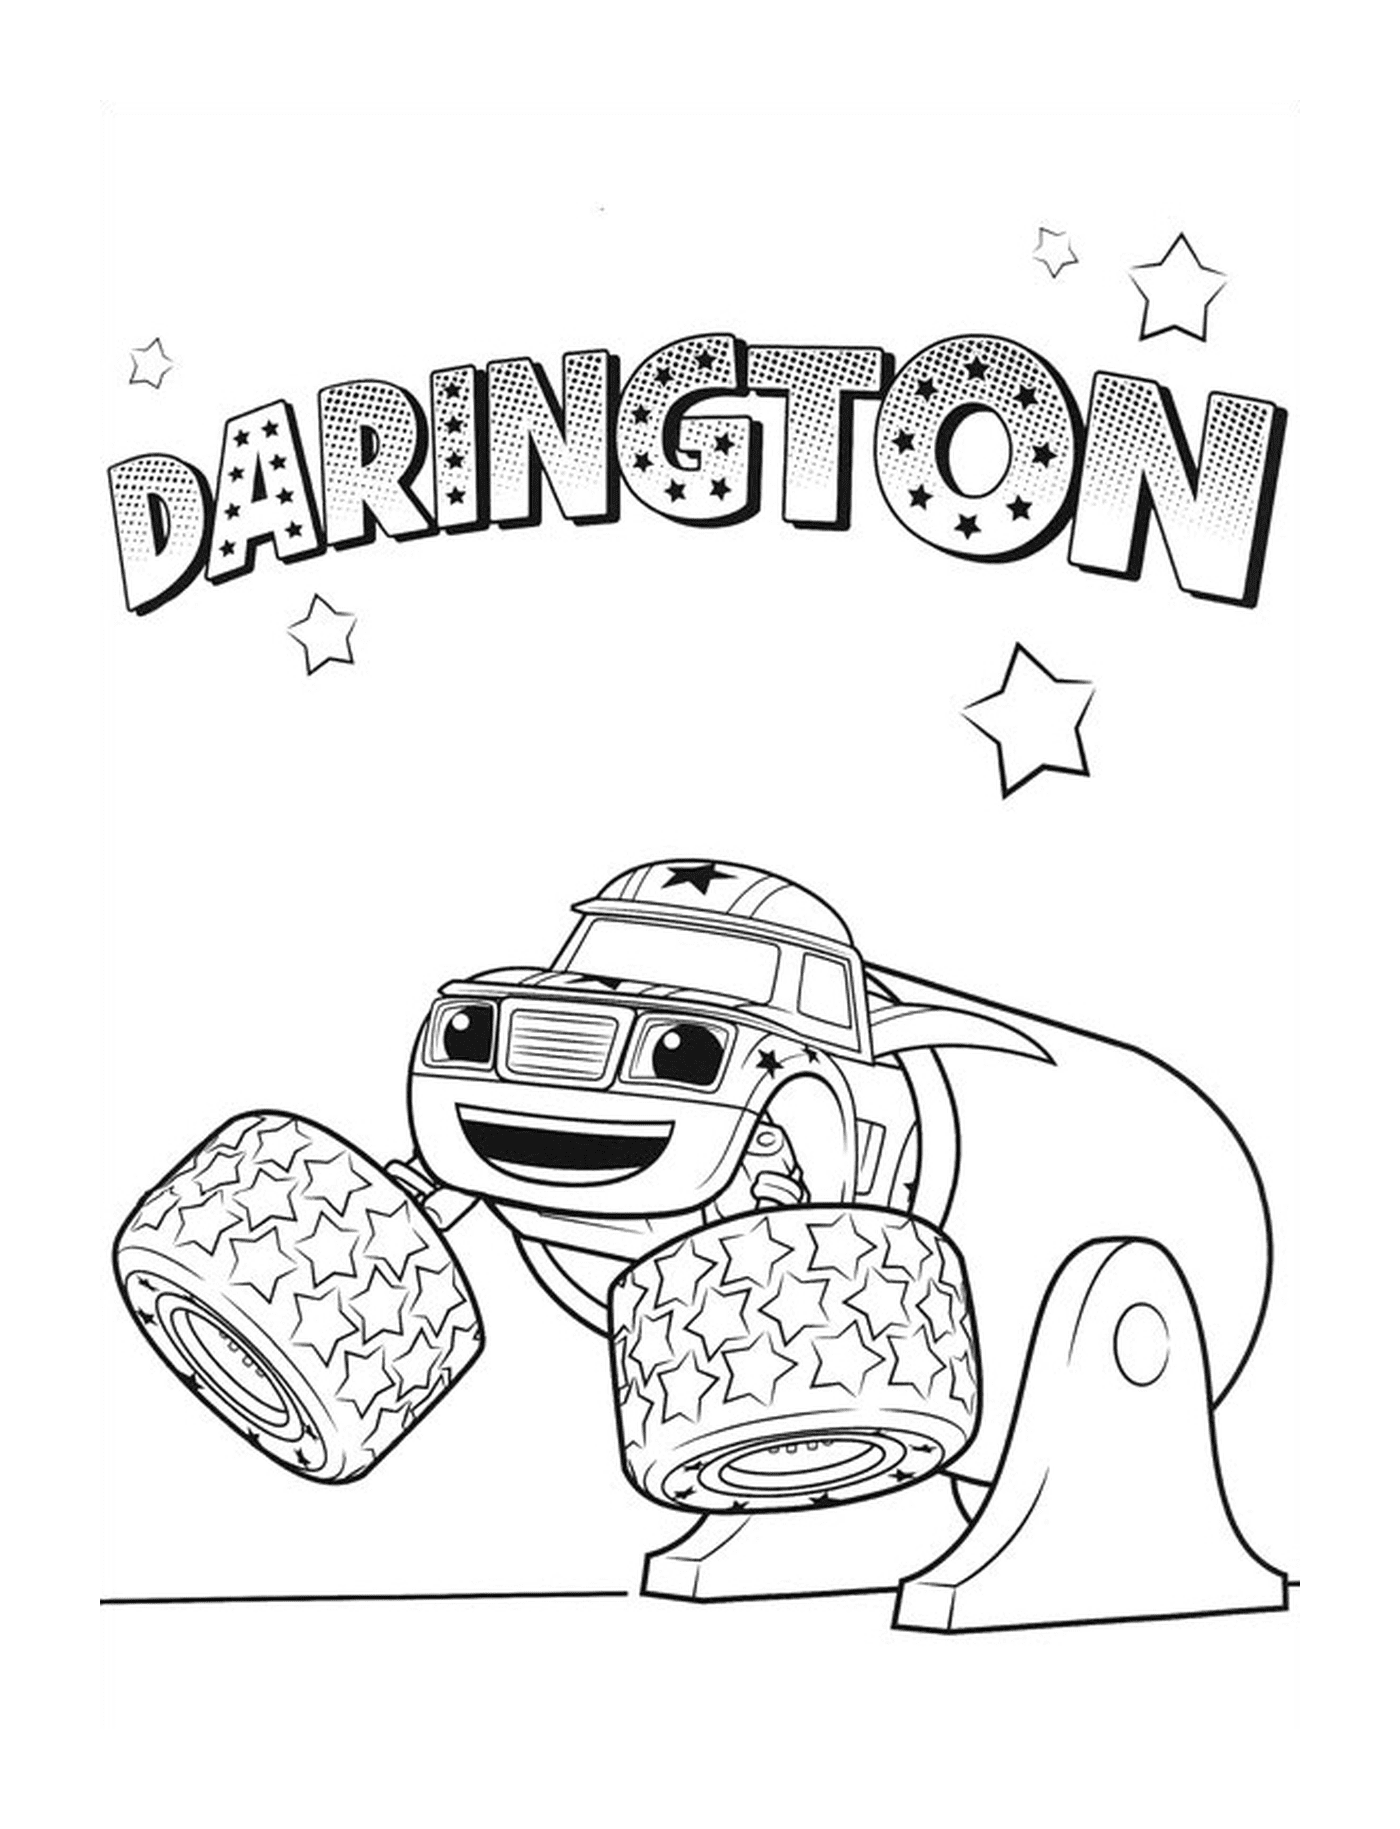  A car named Darington Blaze 